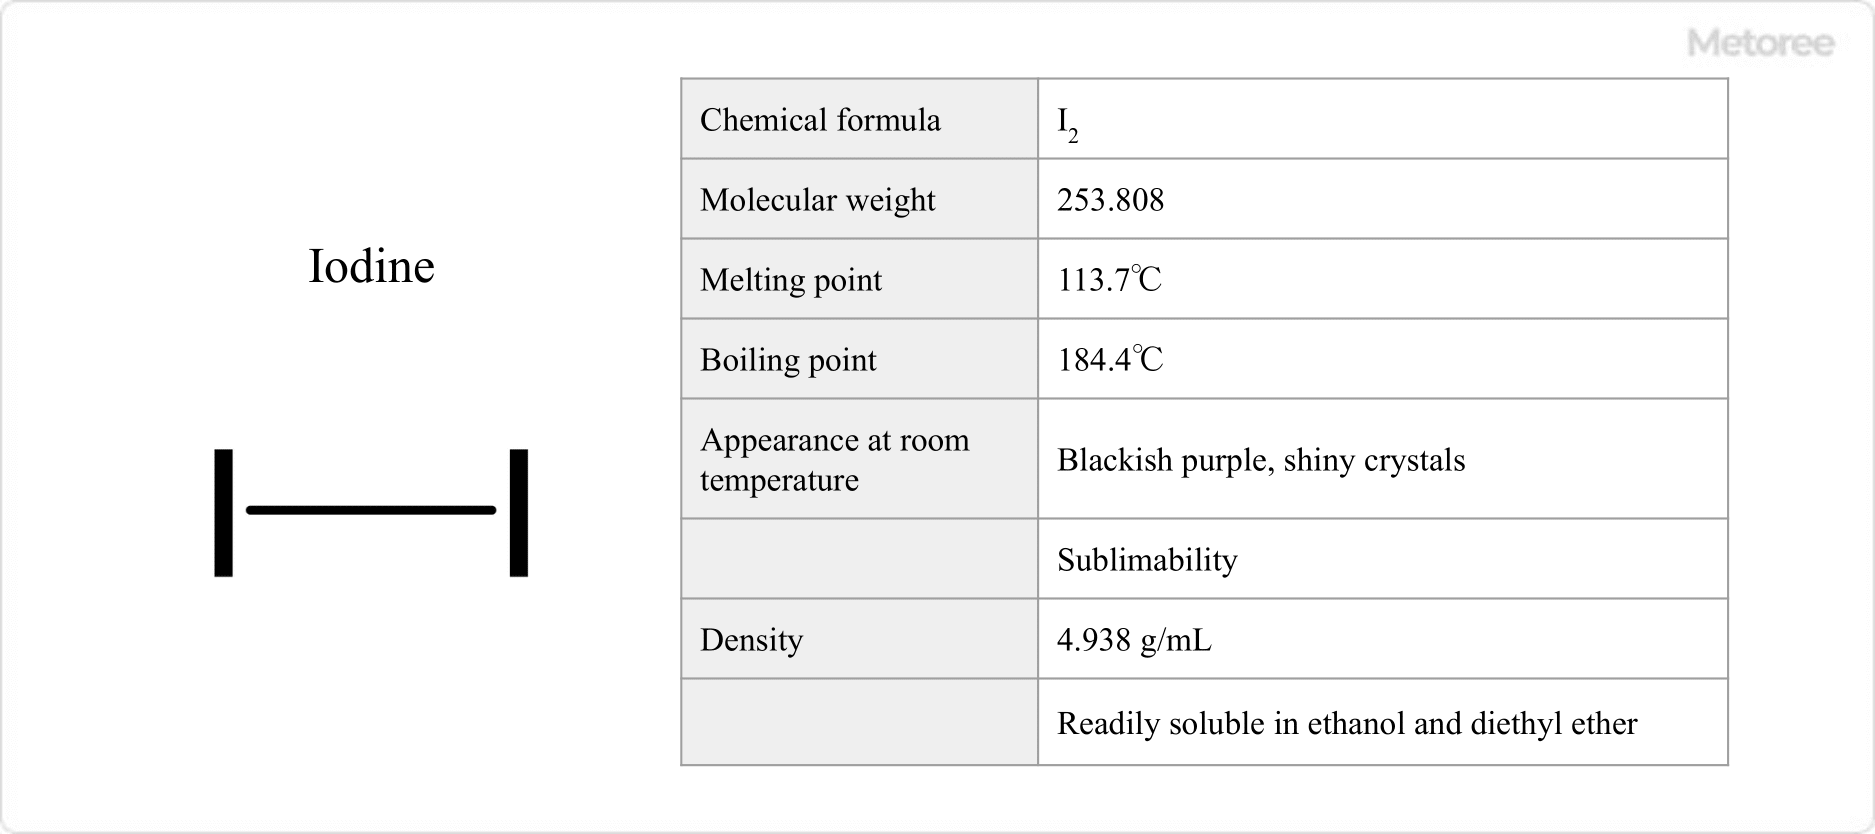 Figure 1. Basic Information on Iodine